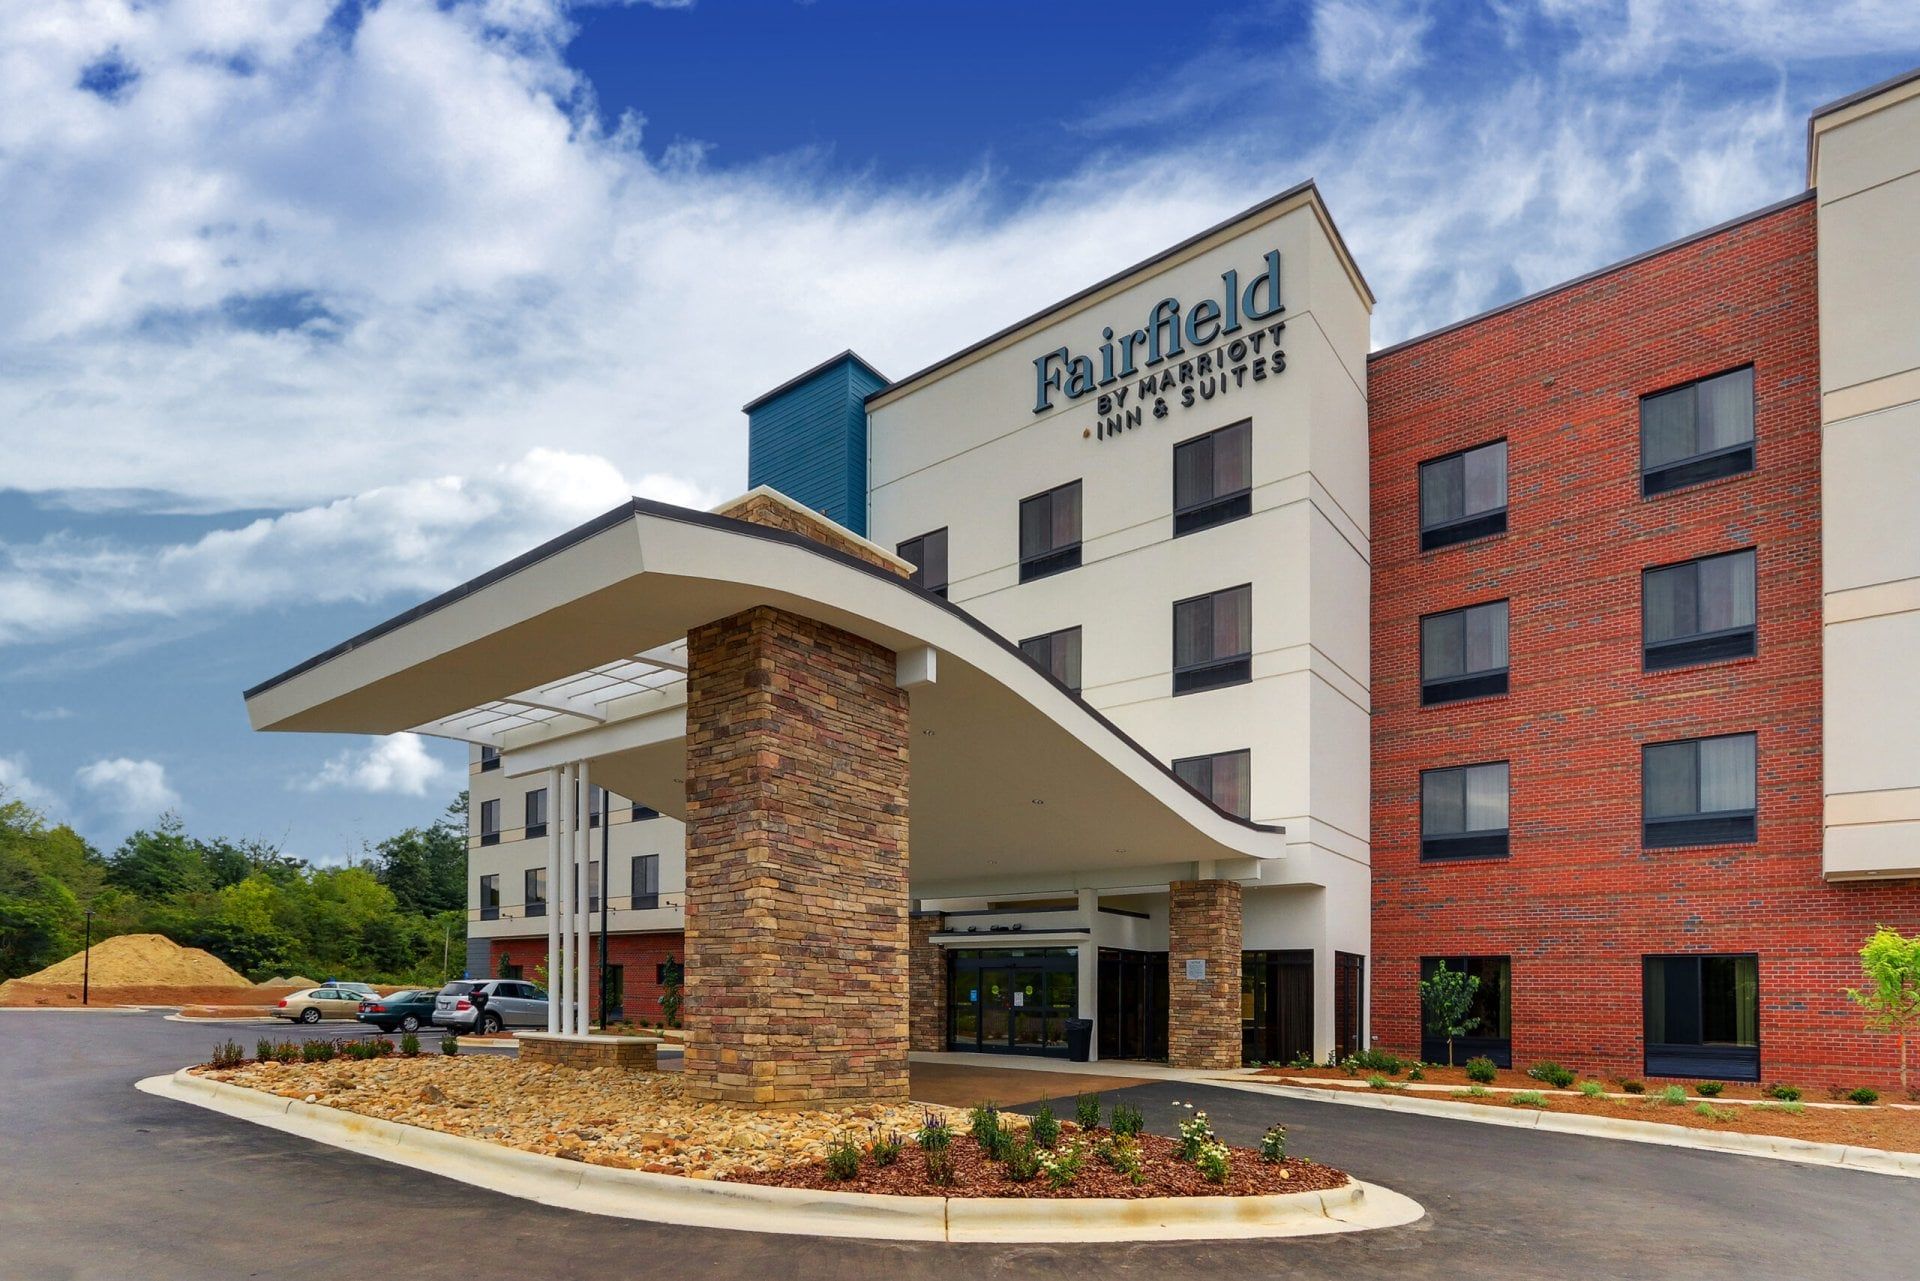 Fairfield Inn & Suites - Weaverville, NC